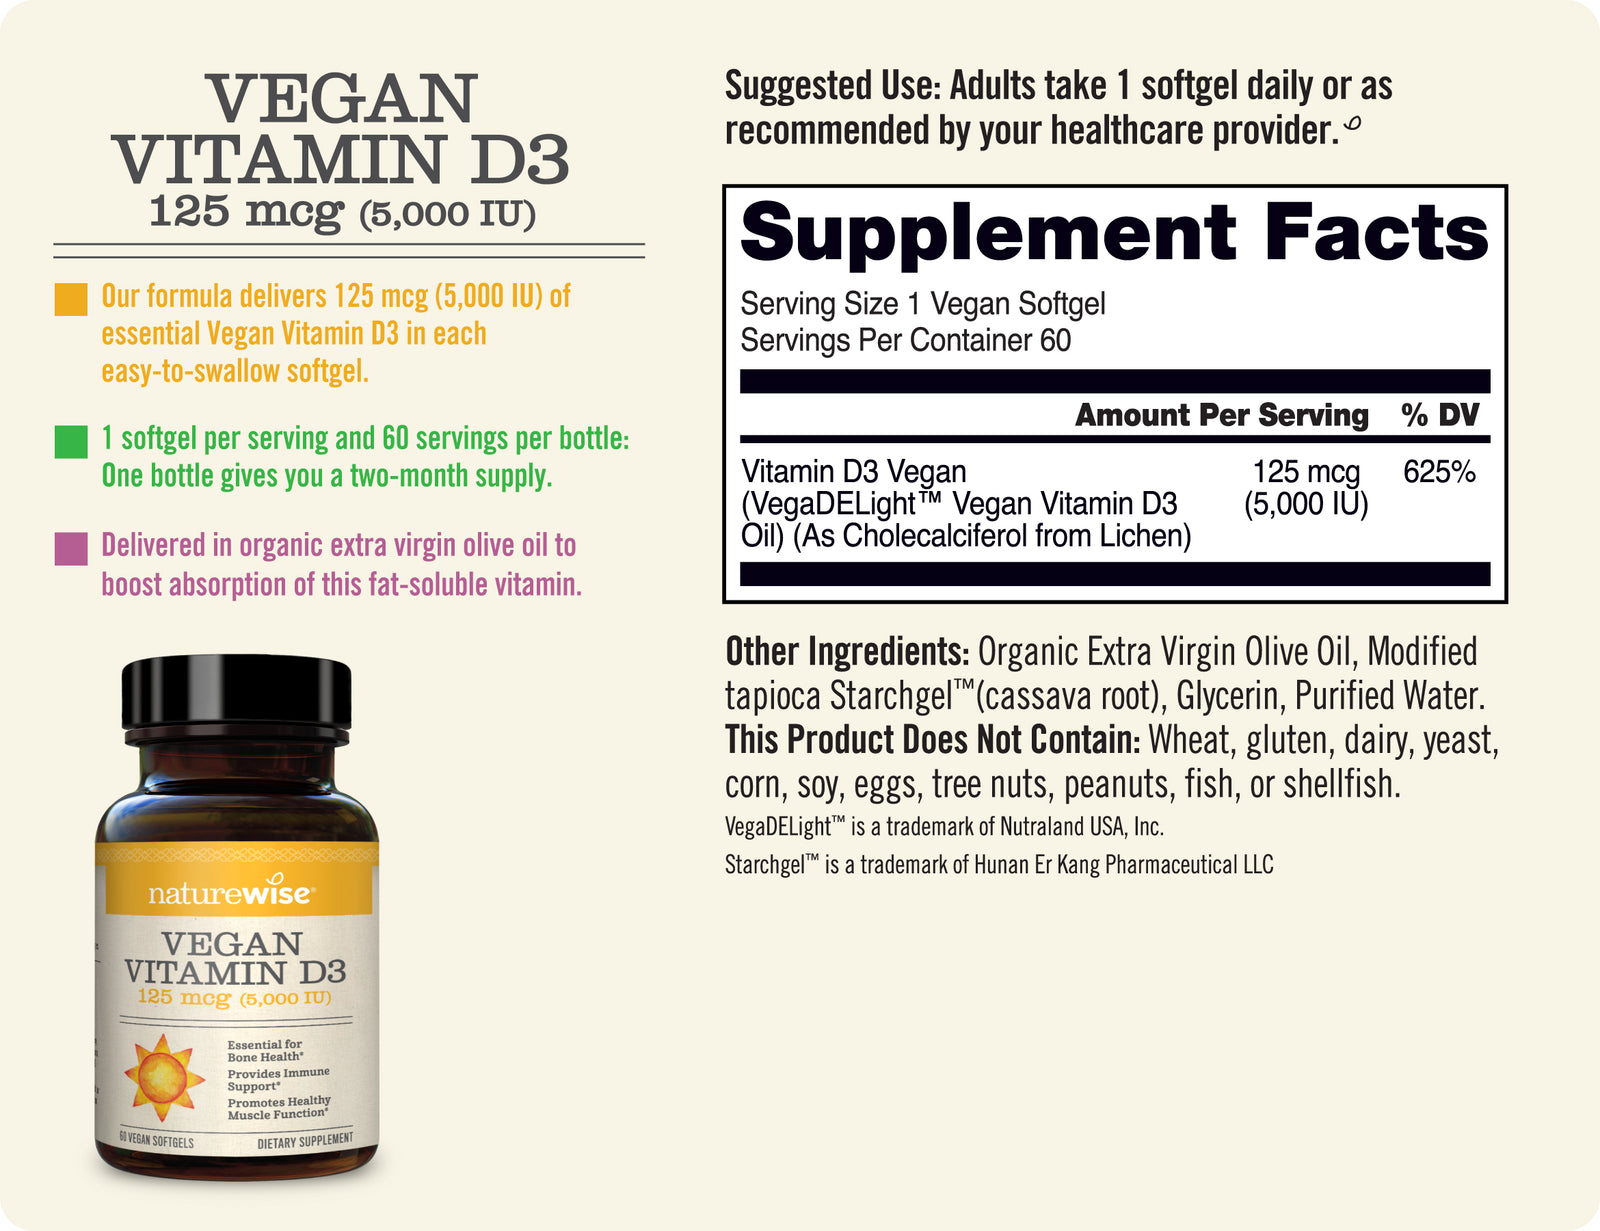 Vegan Vitamin D3 5,000 IU Sup Facts 